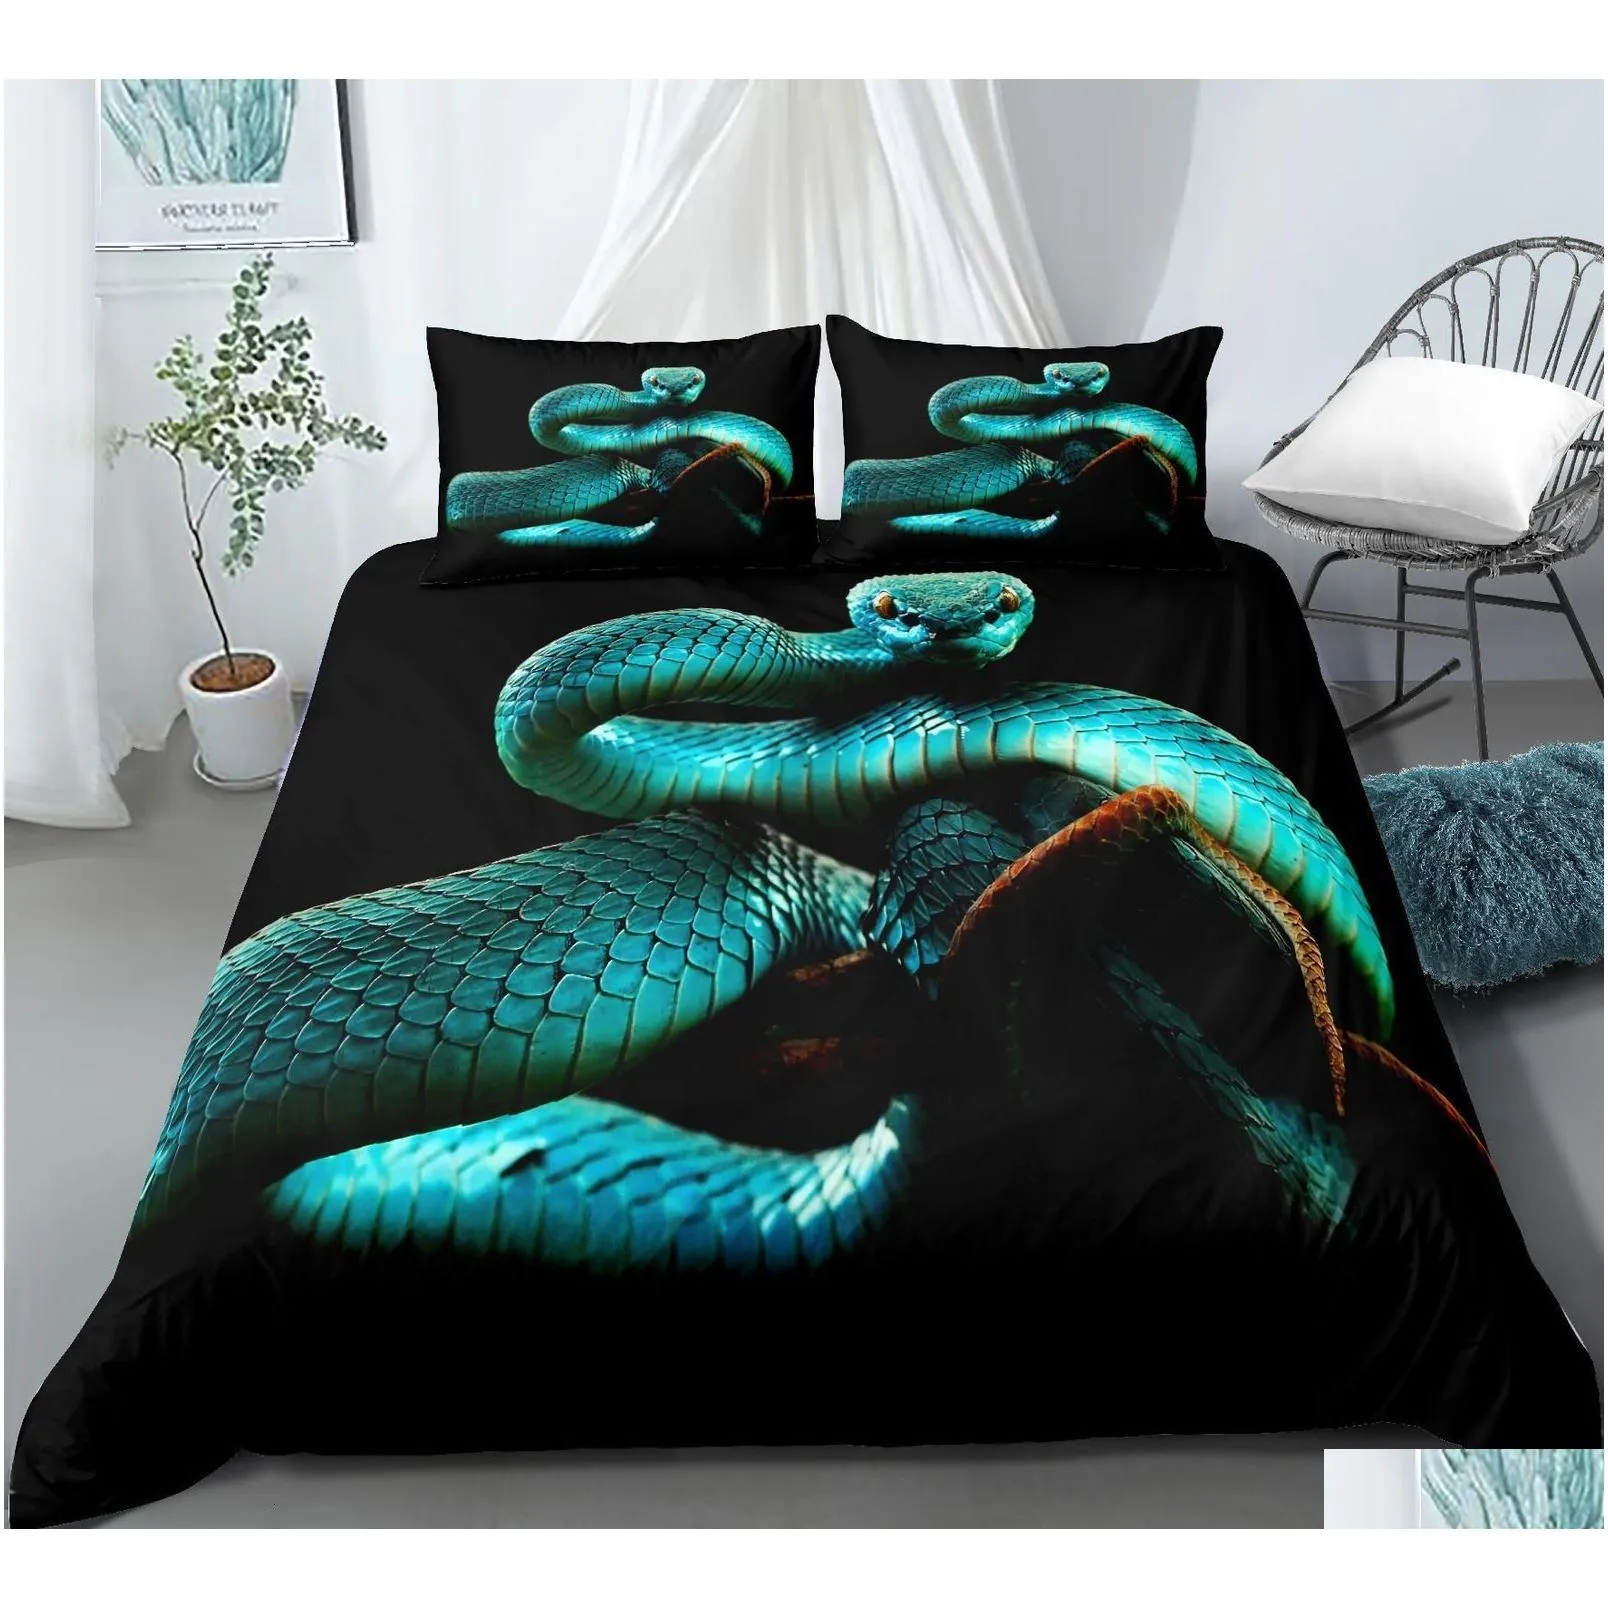 bedding sets 3d snake style bedding set for bedroom soft duvet cover bedspreads for bed linen comefortable quilt and pillowcase 221208